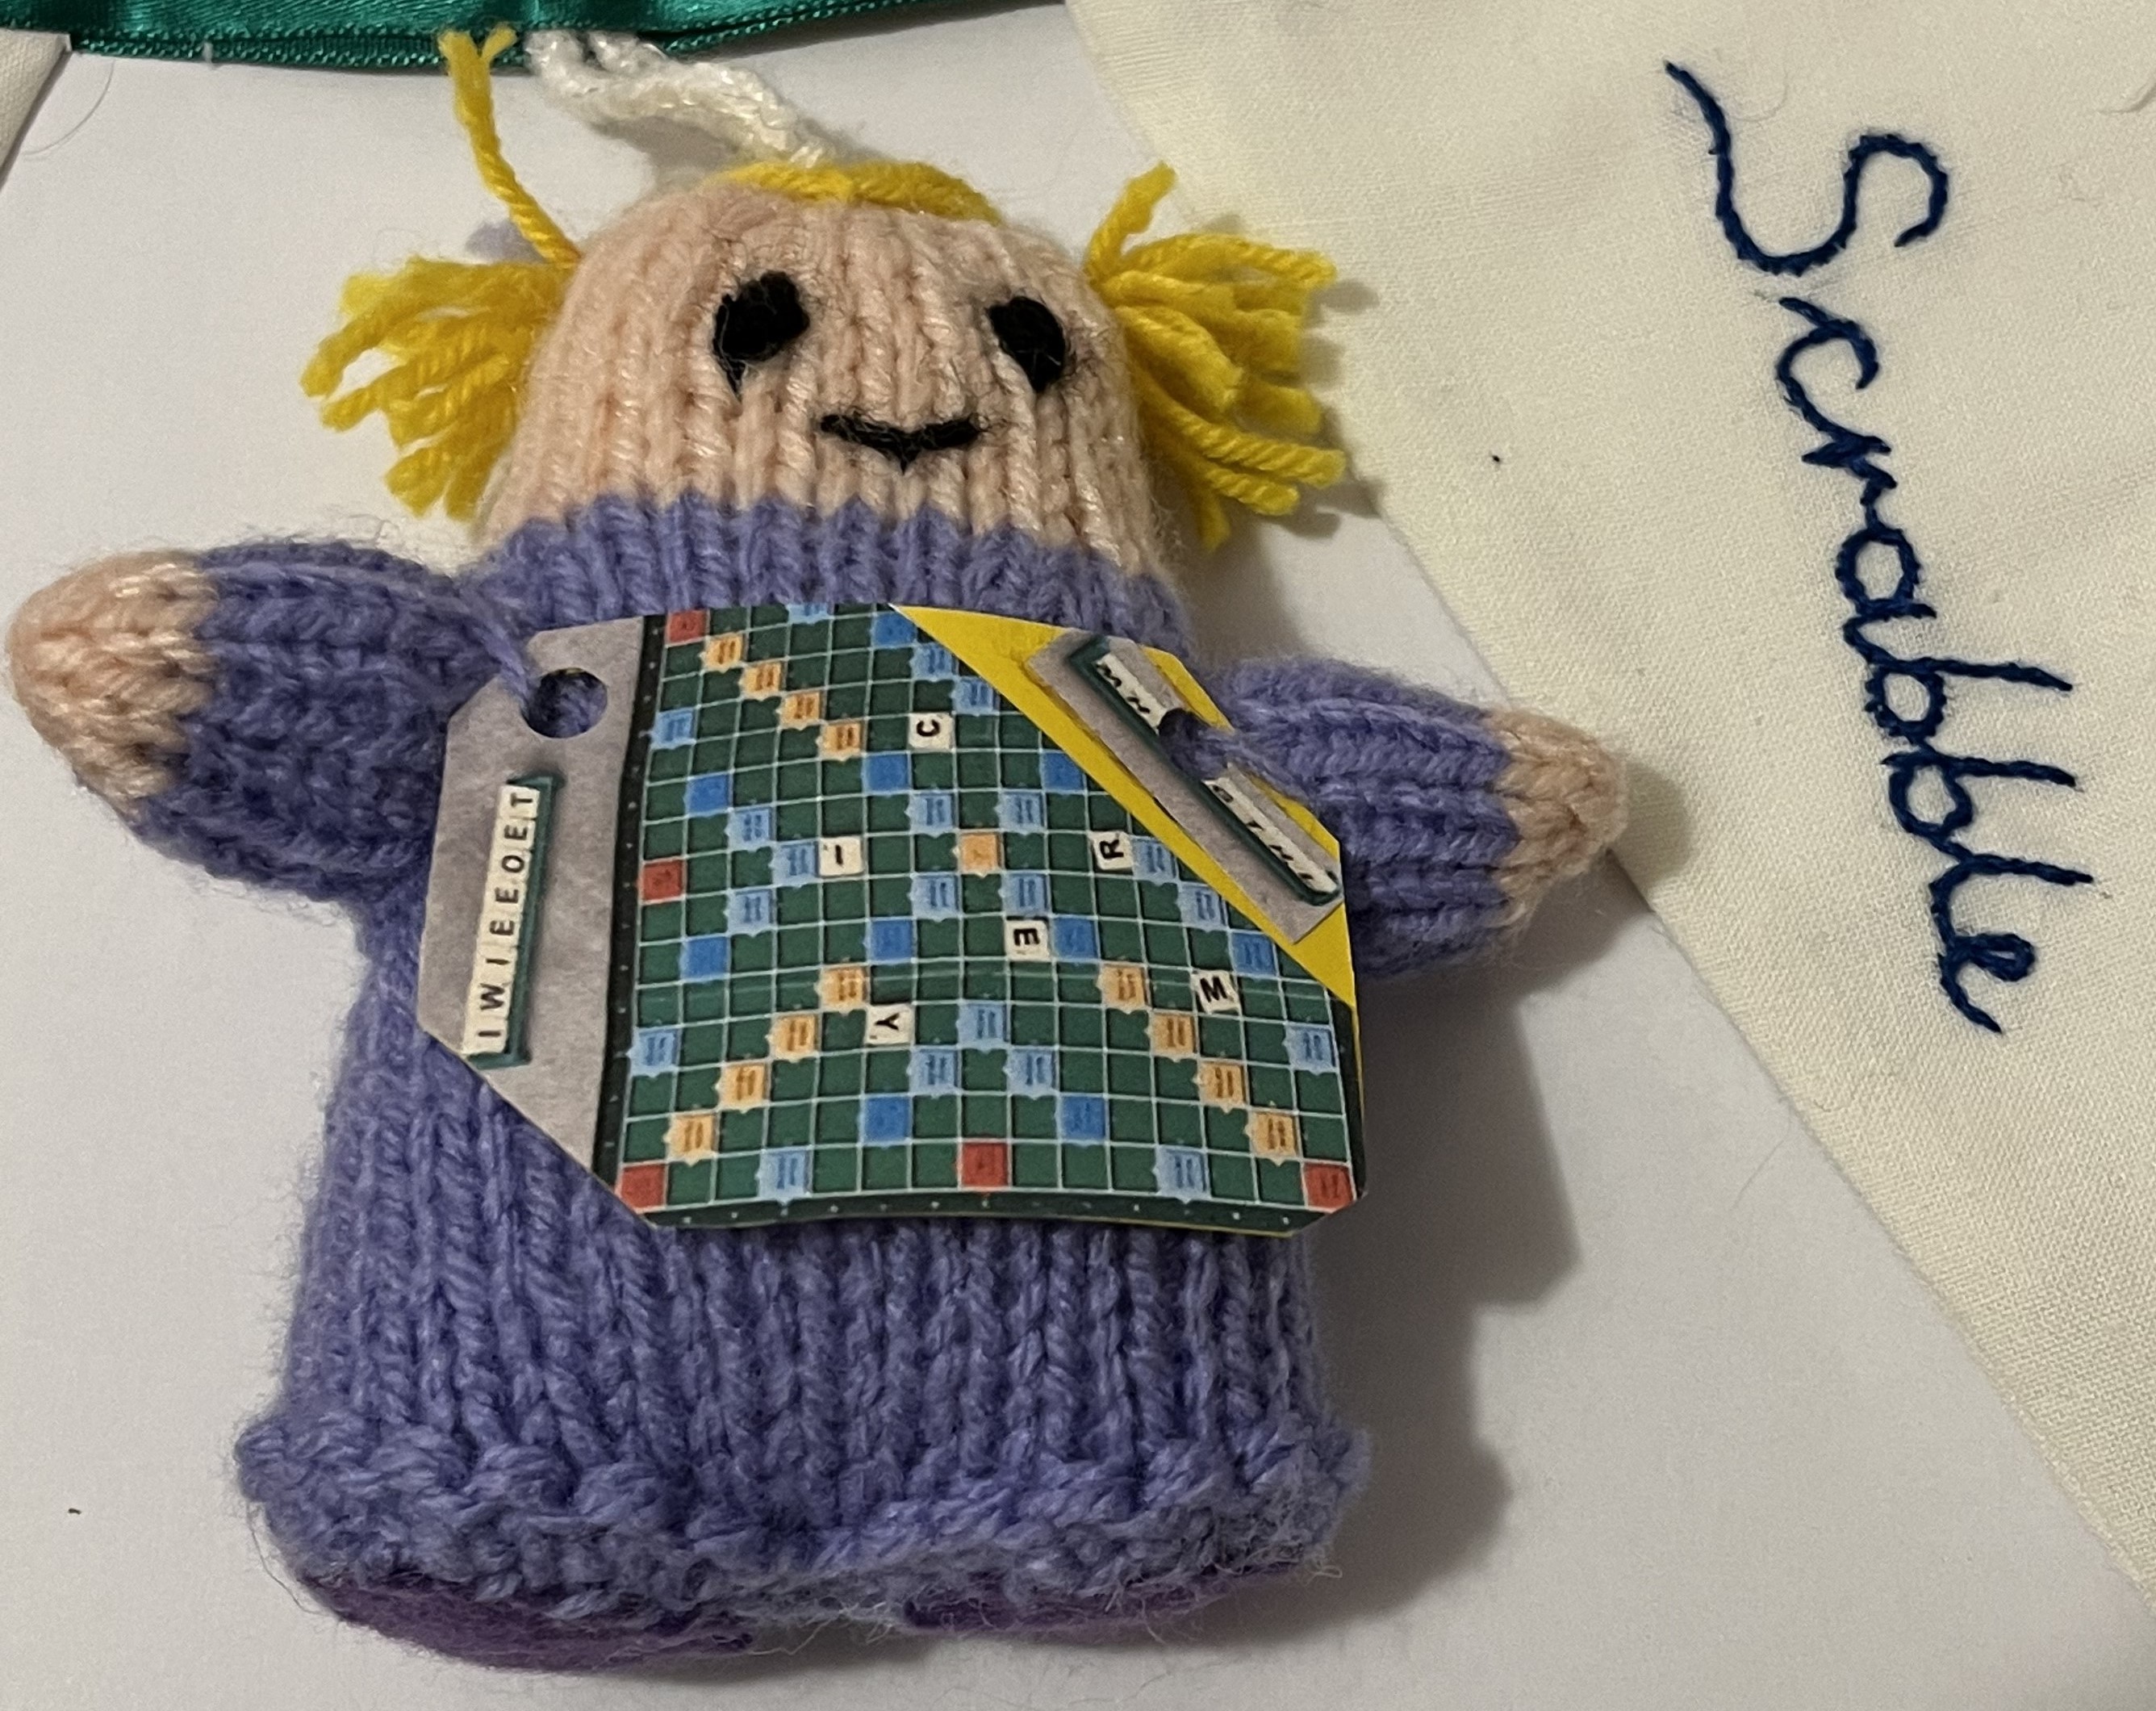 Scrabble whitty-knit